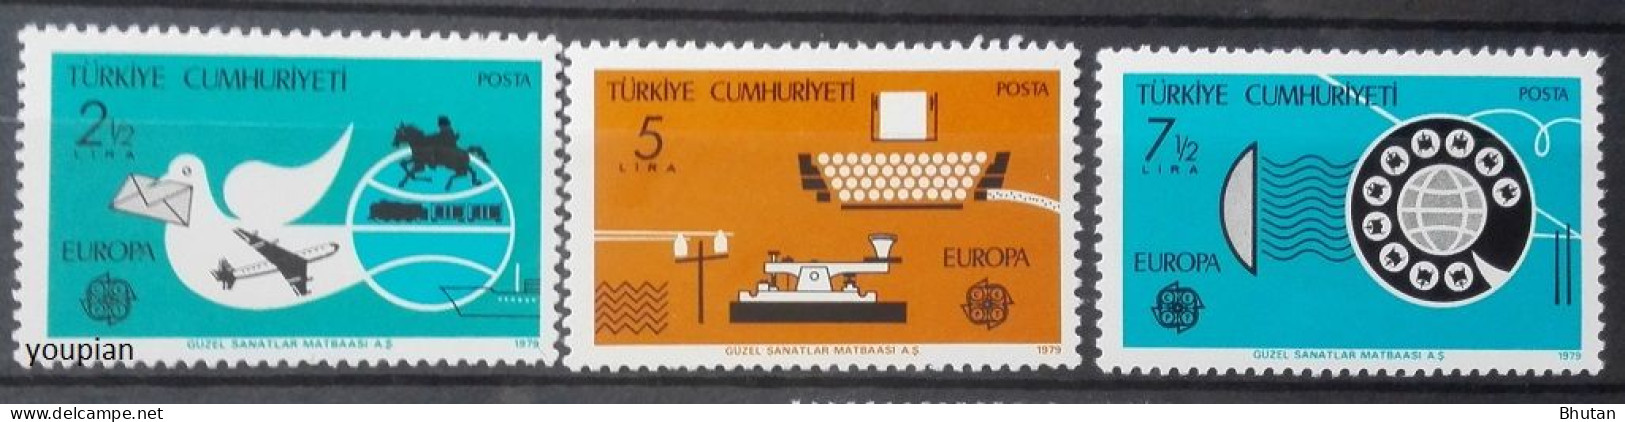 Türkiye 1979, Europa - Postal History, MNH Stamps Set - Unused Stamps